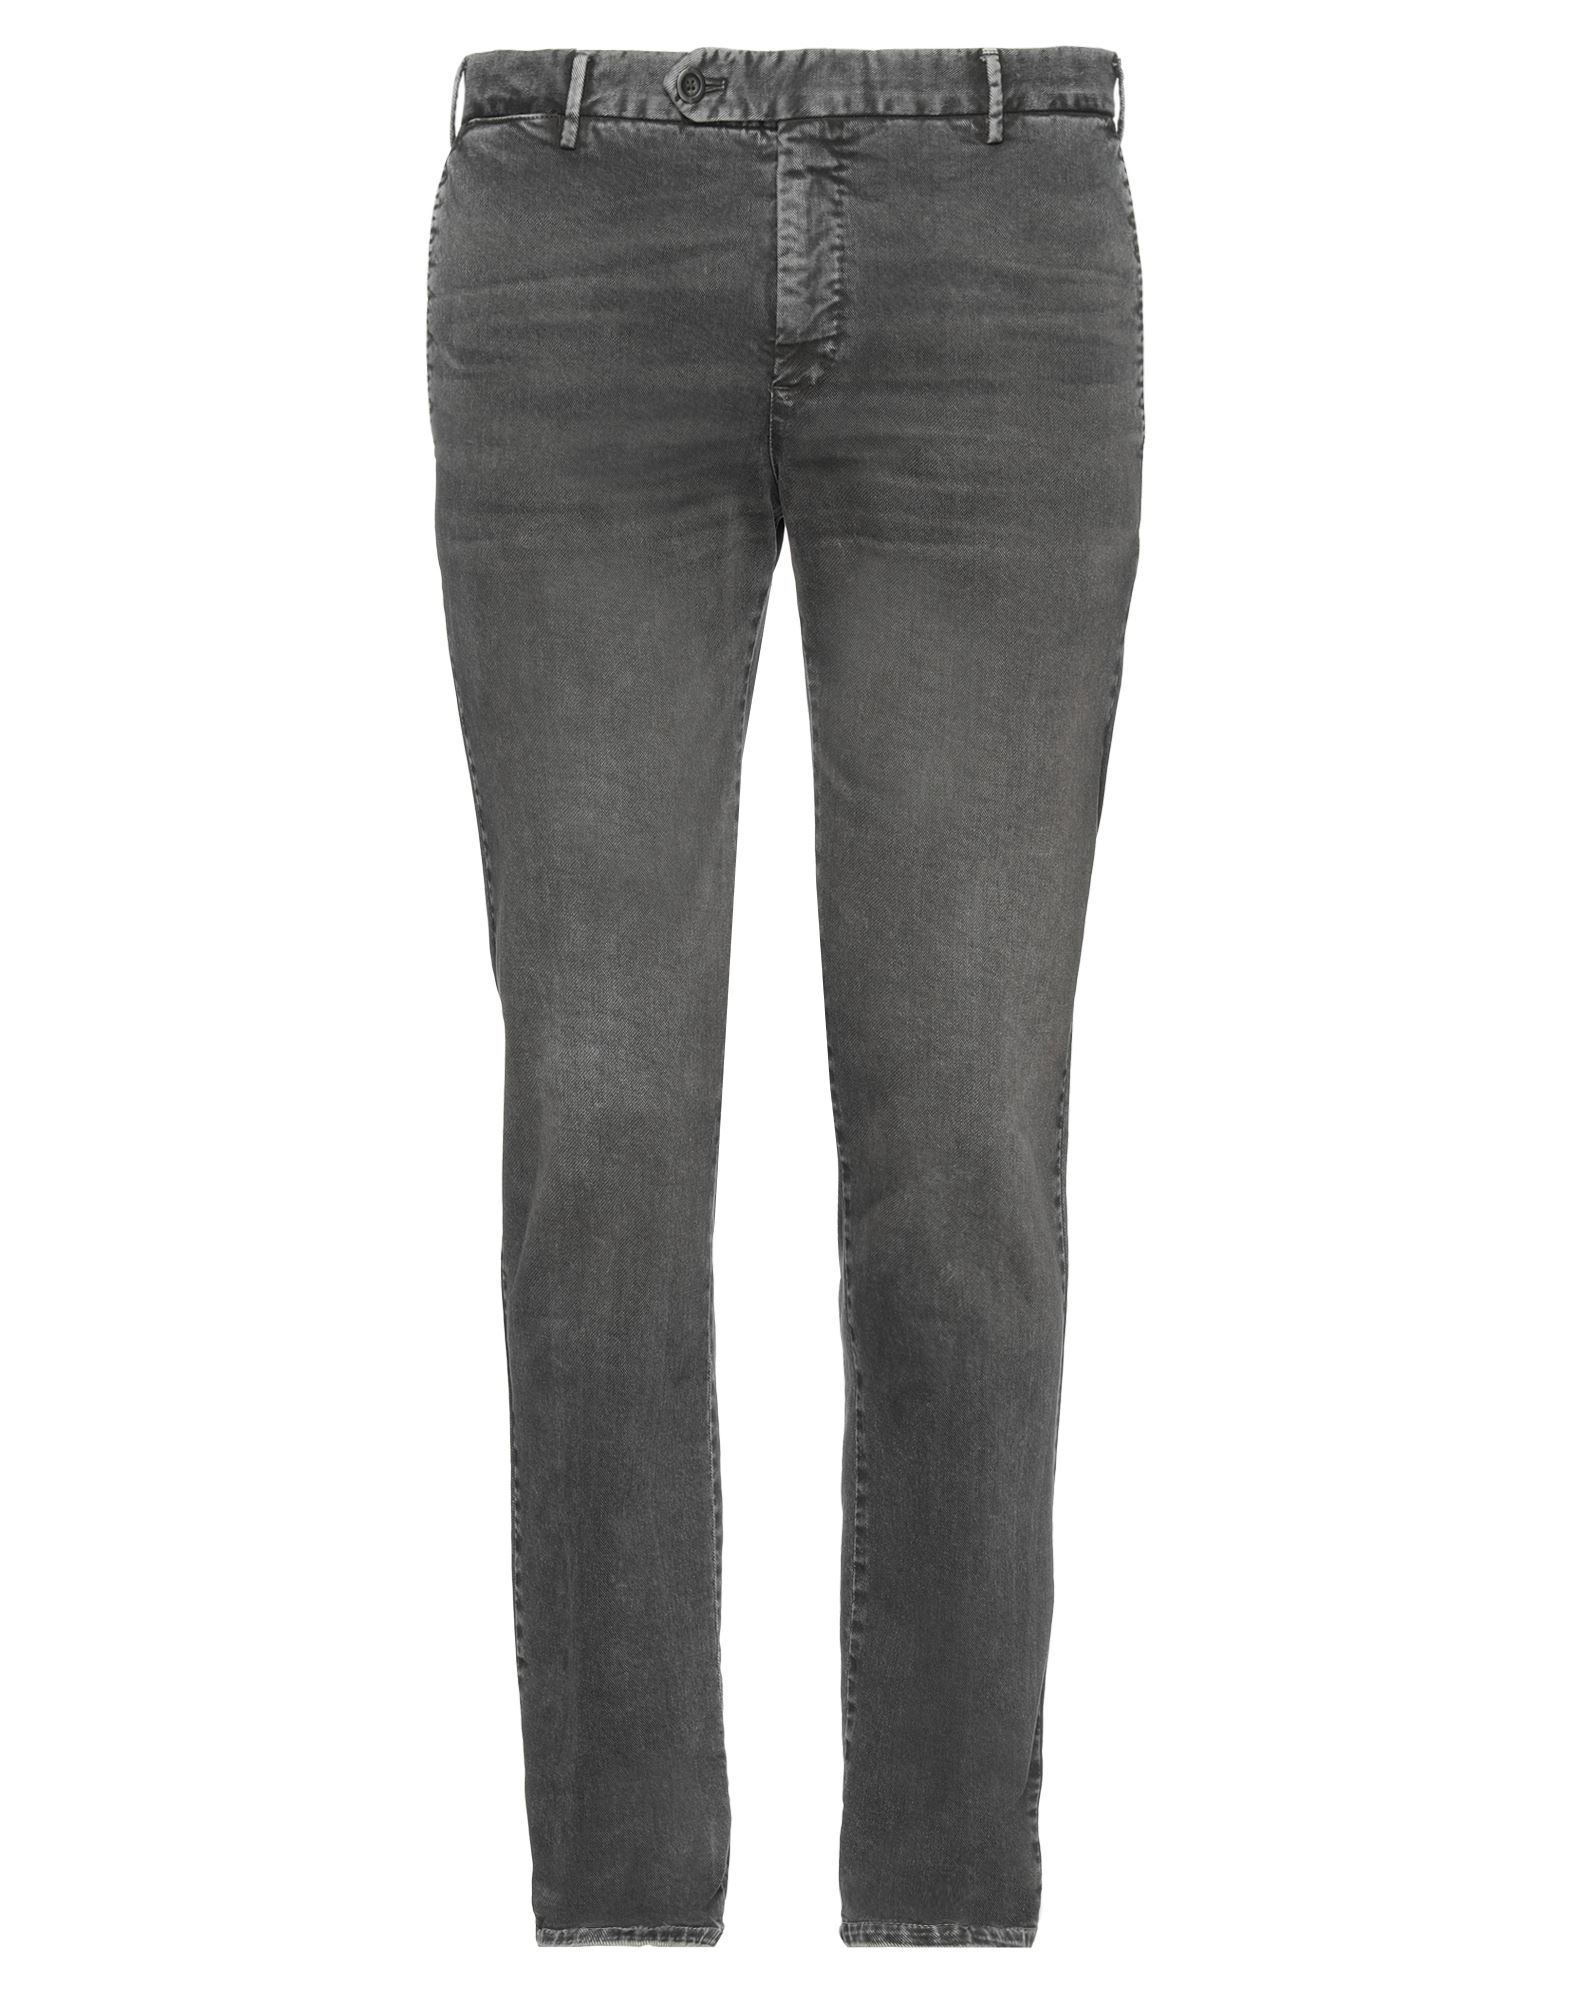 Pt Torino Jeans In Steel Grey